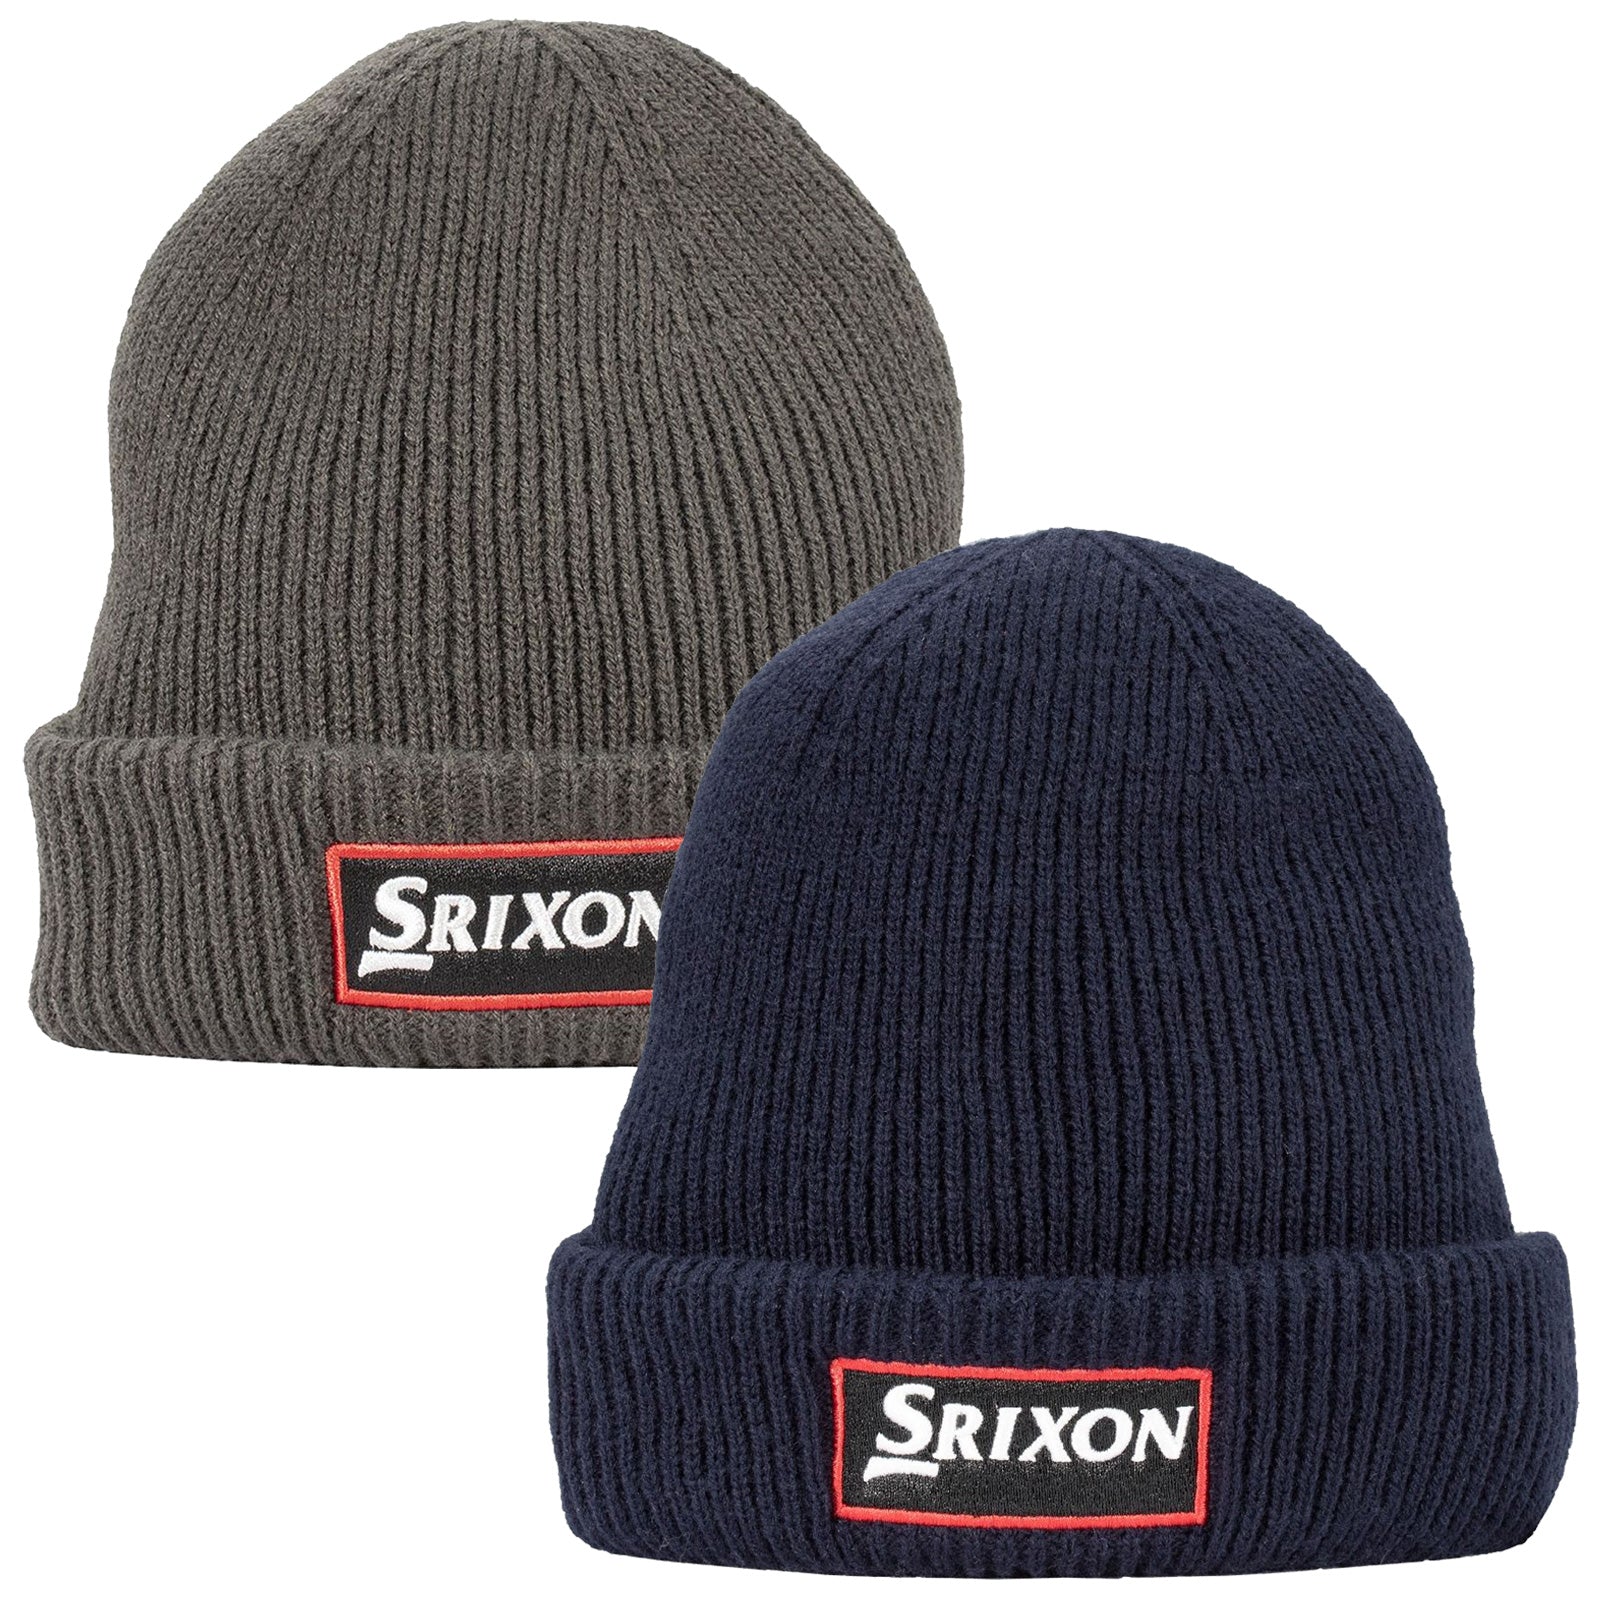 Srixon Beanie Hat